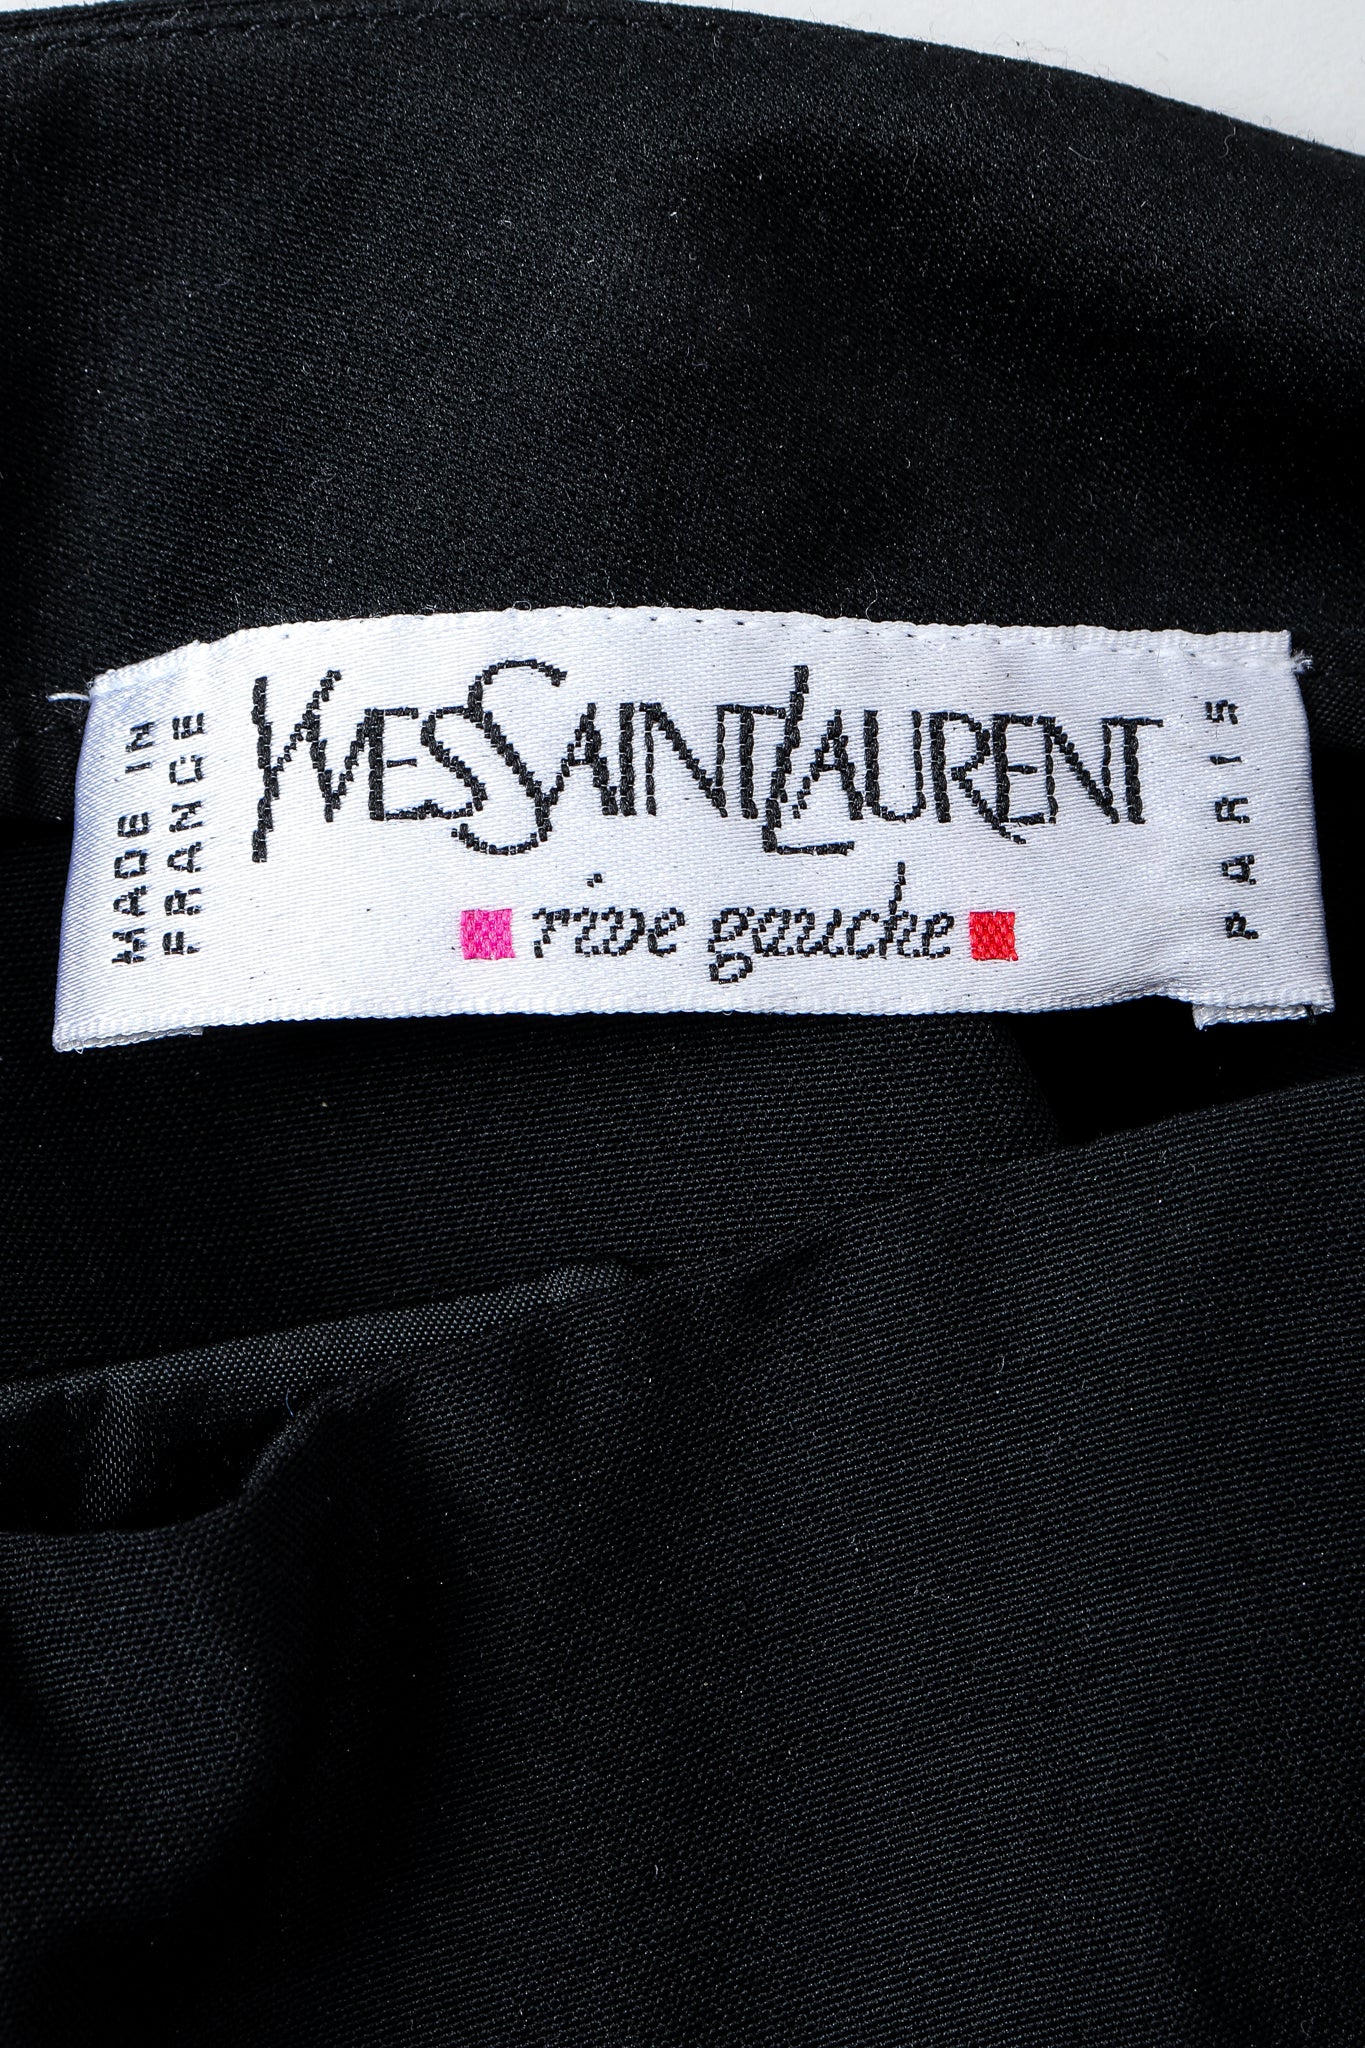 Vintage YSL Saint Laurent Label on black